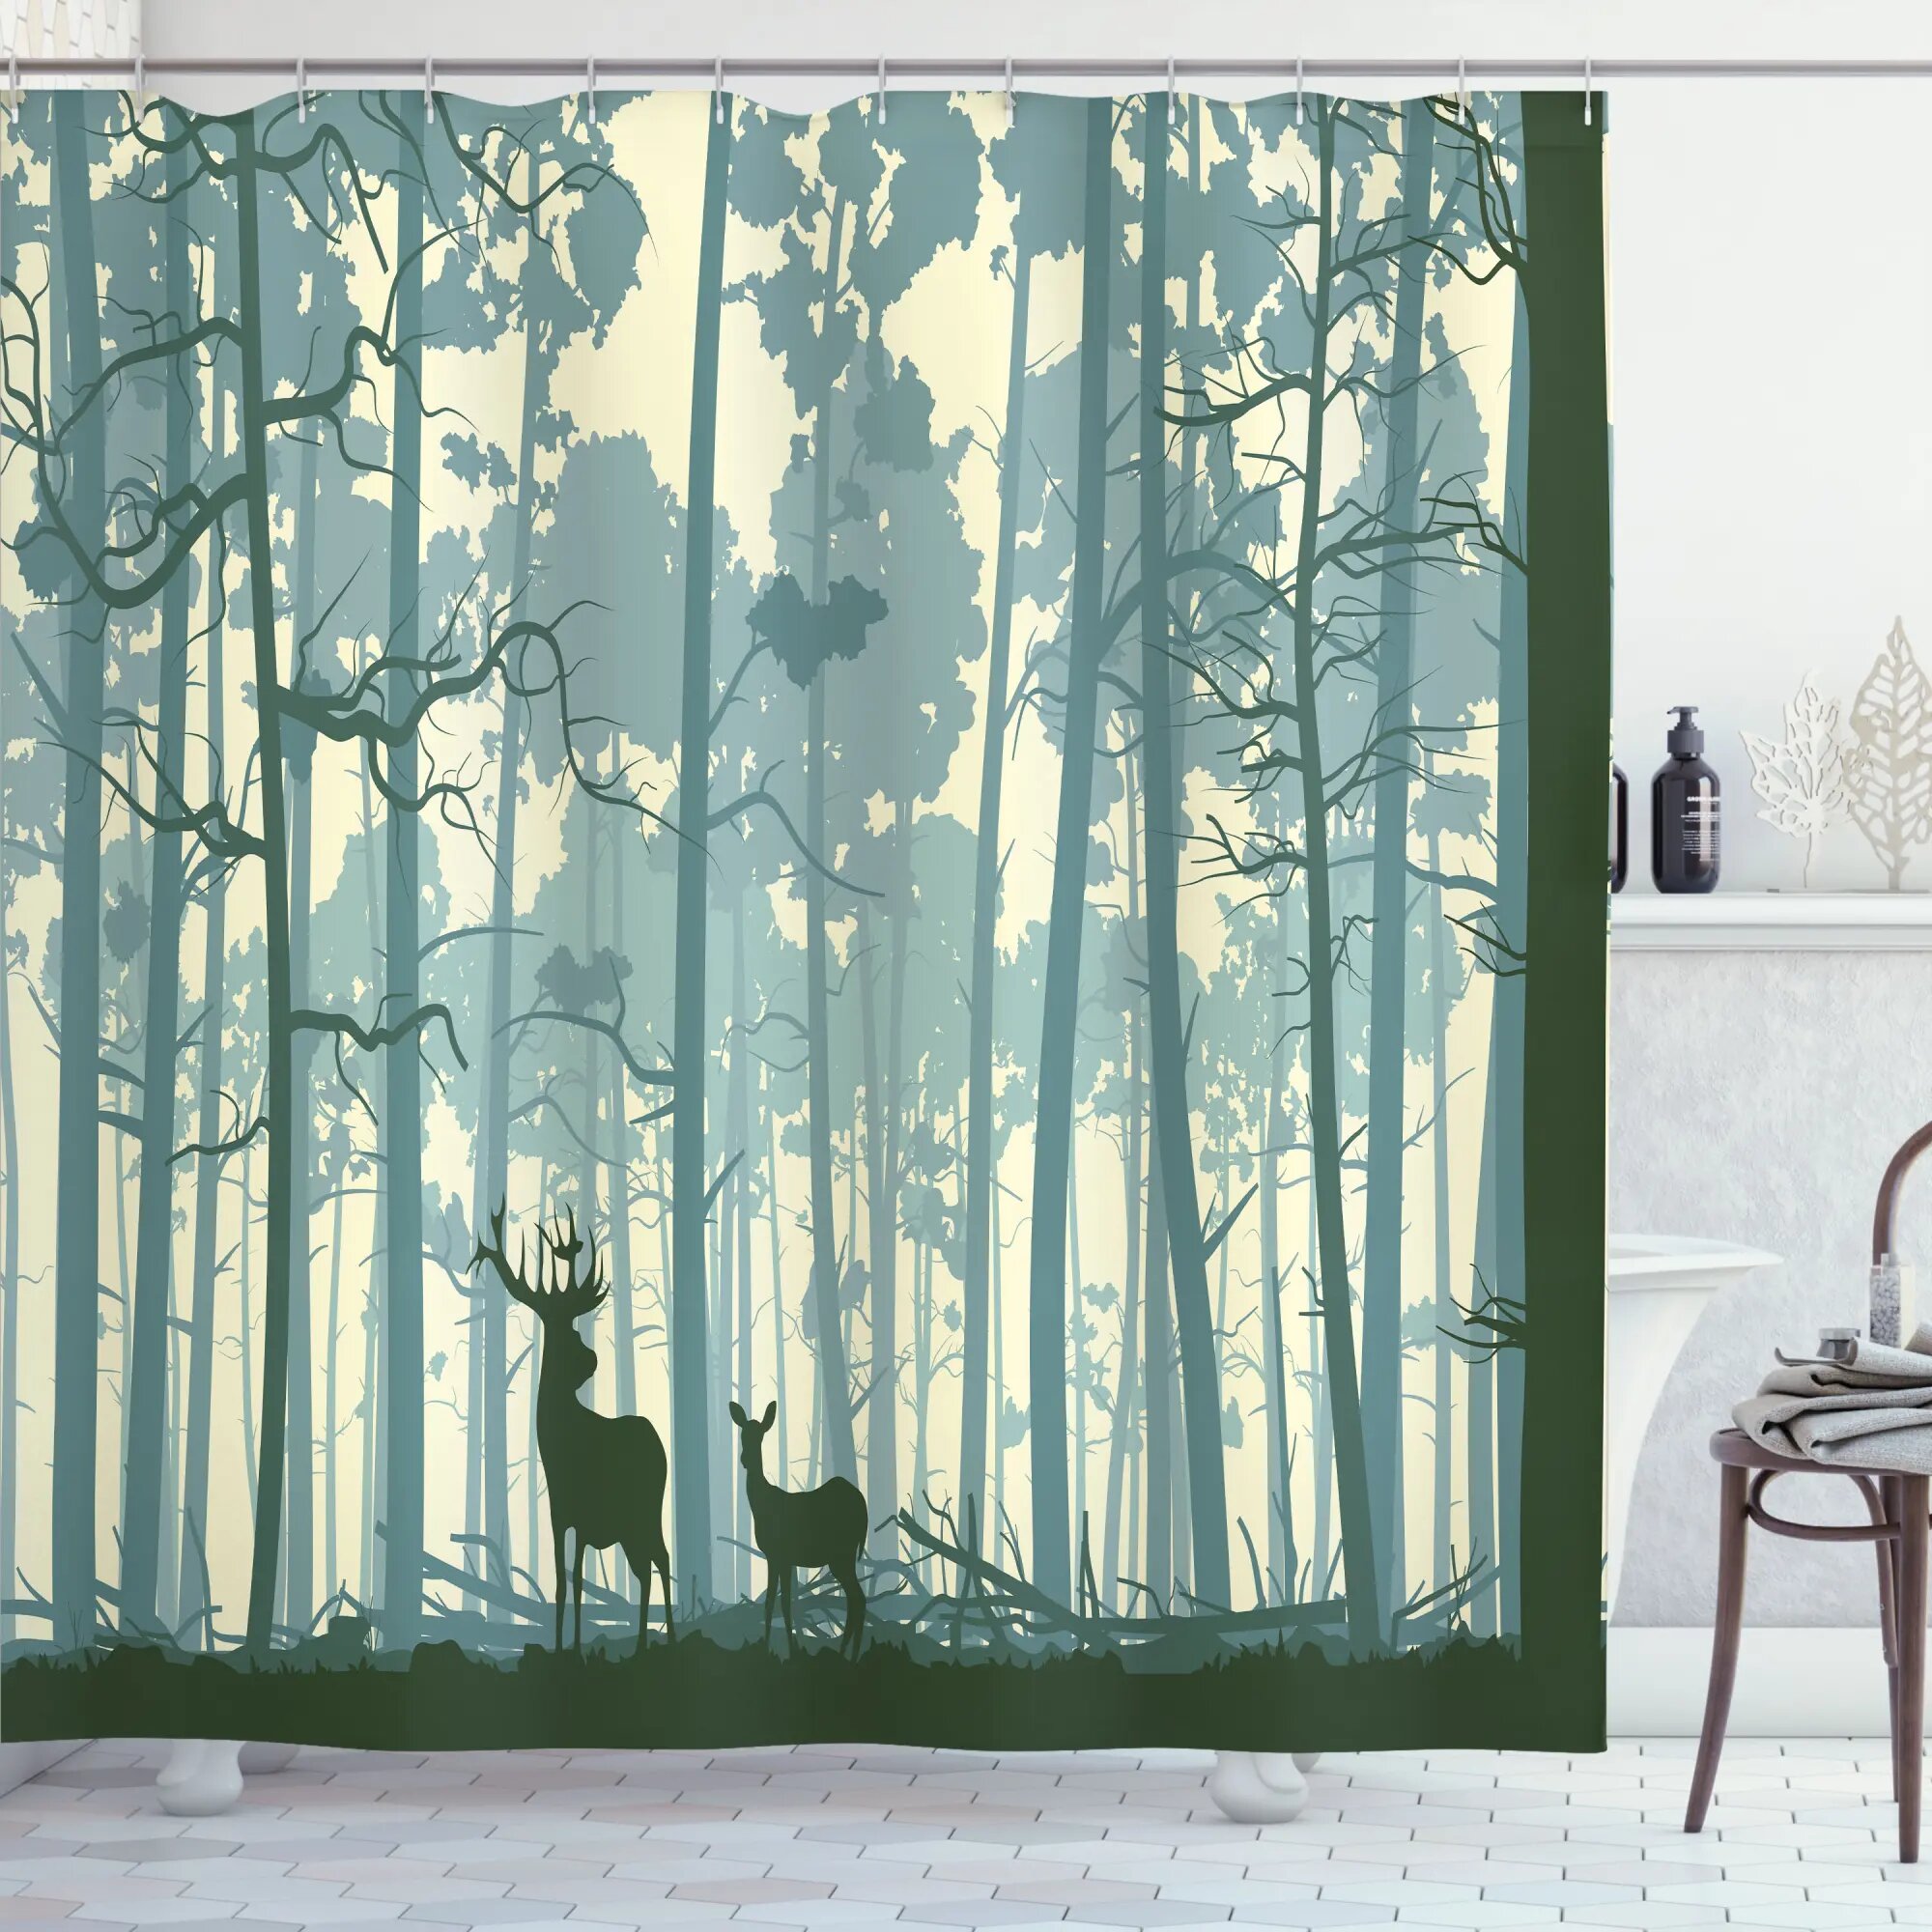 Deer Shower Curtain Set + Hooks East Urban Home Size: 75 H x 69 W